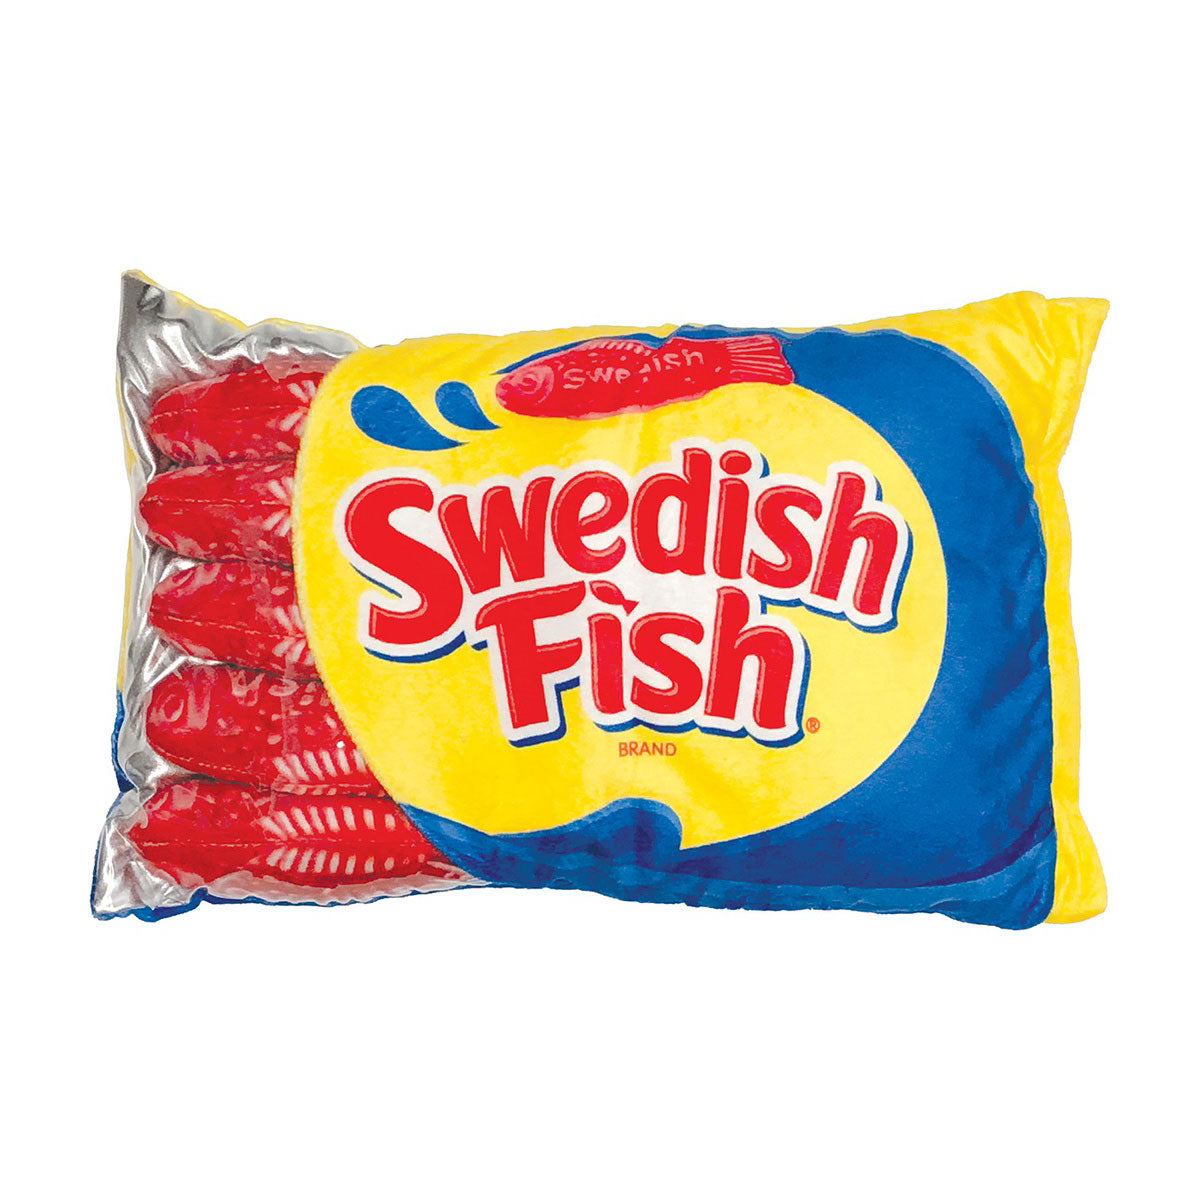 Swedish Fish Packaging Fleece Plush